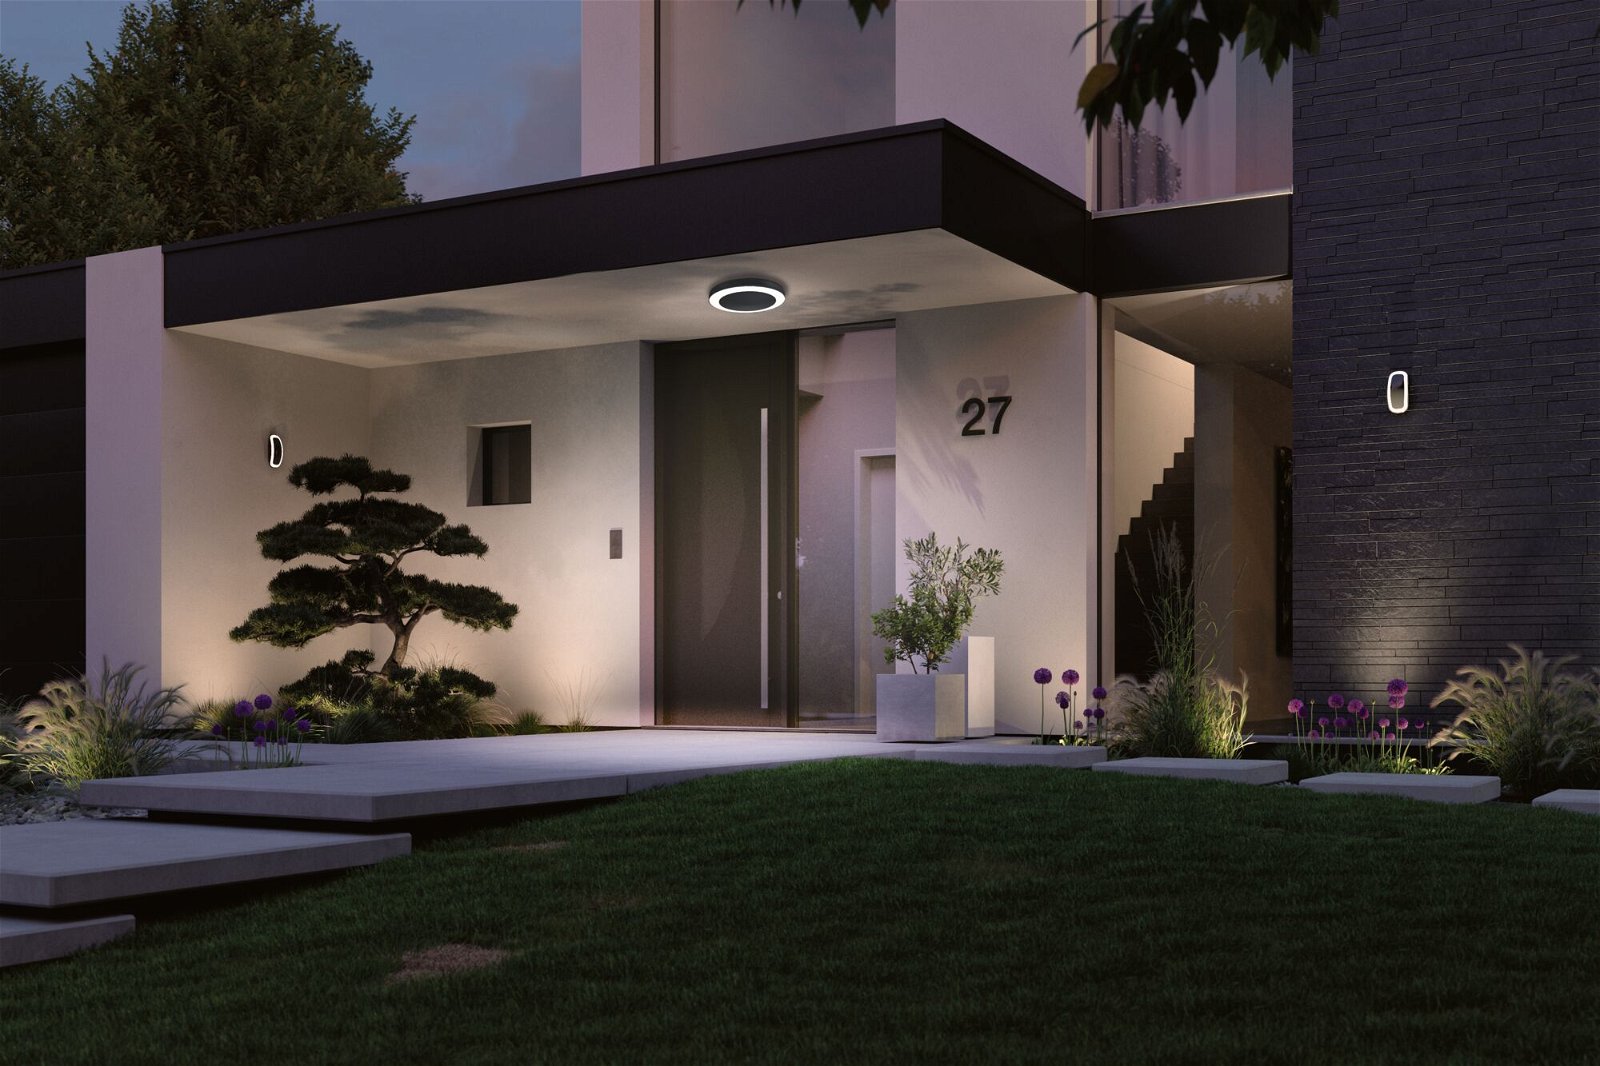 Plume Boldly Illuminates The Path To Smart Home 2.0